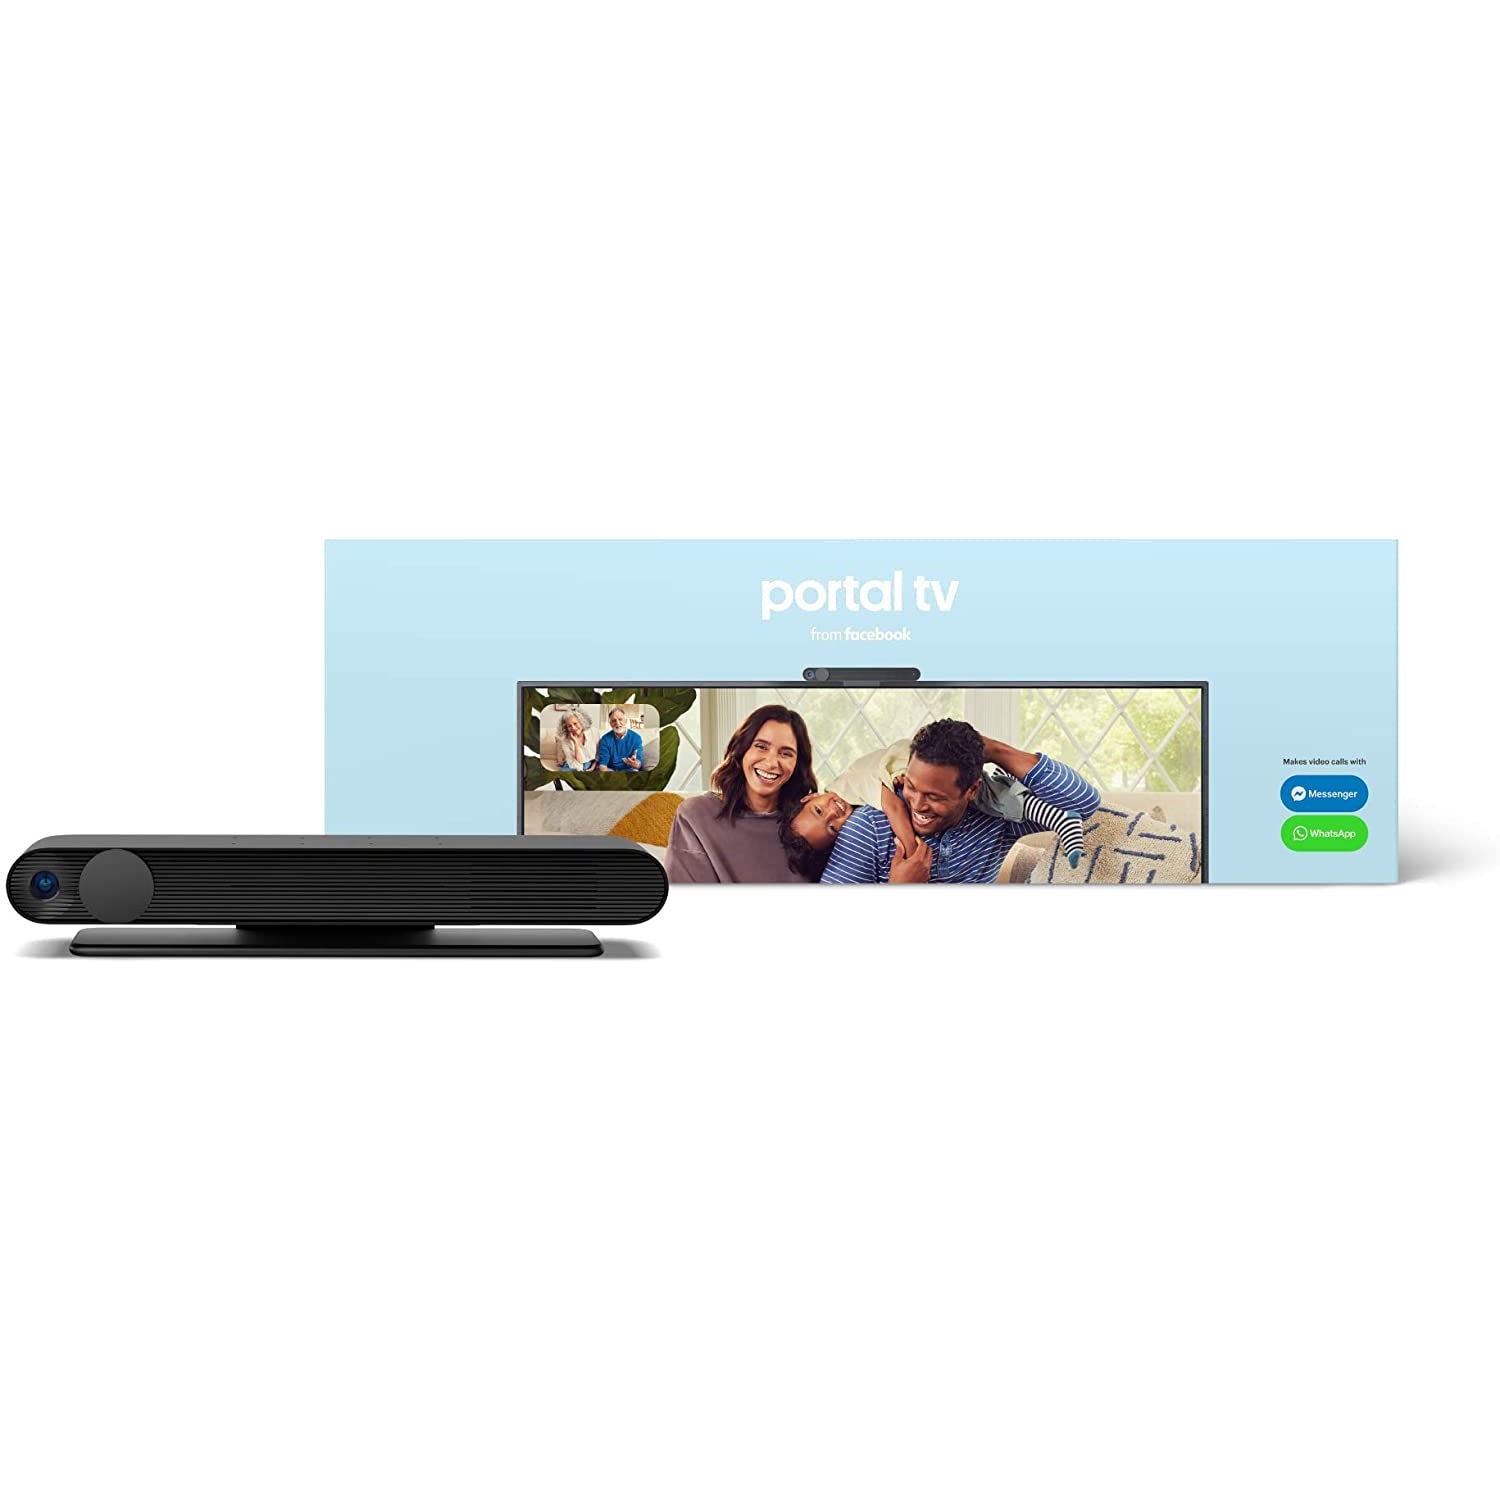 Portal TV from Facebook Smart Video Calling Camera - Black - Pristine